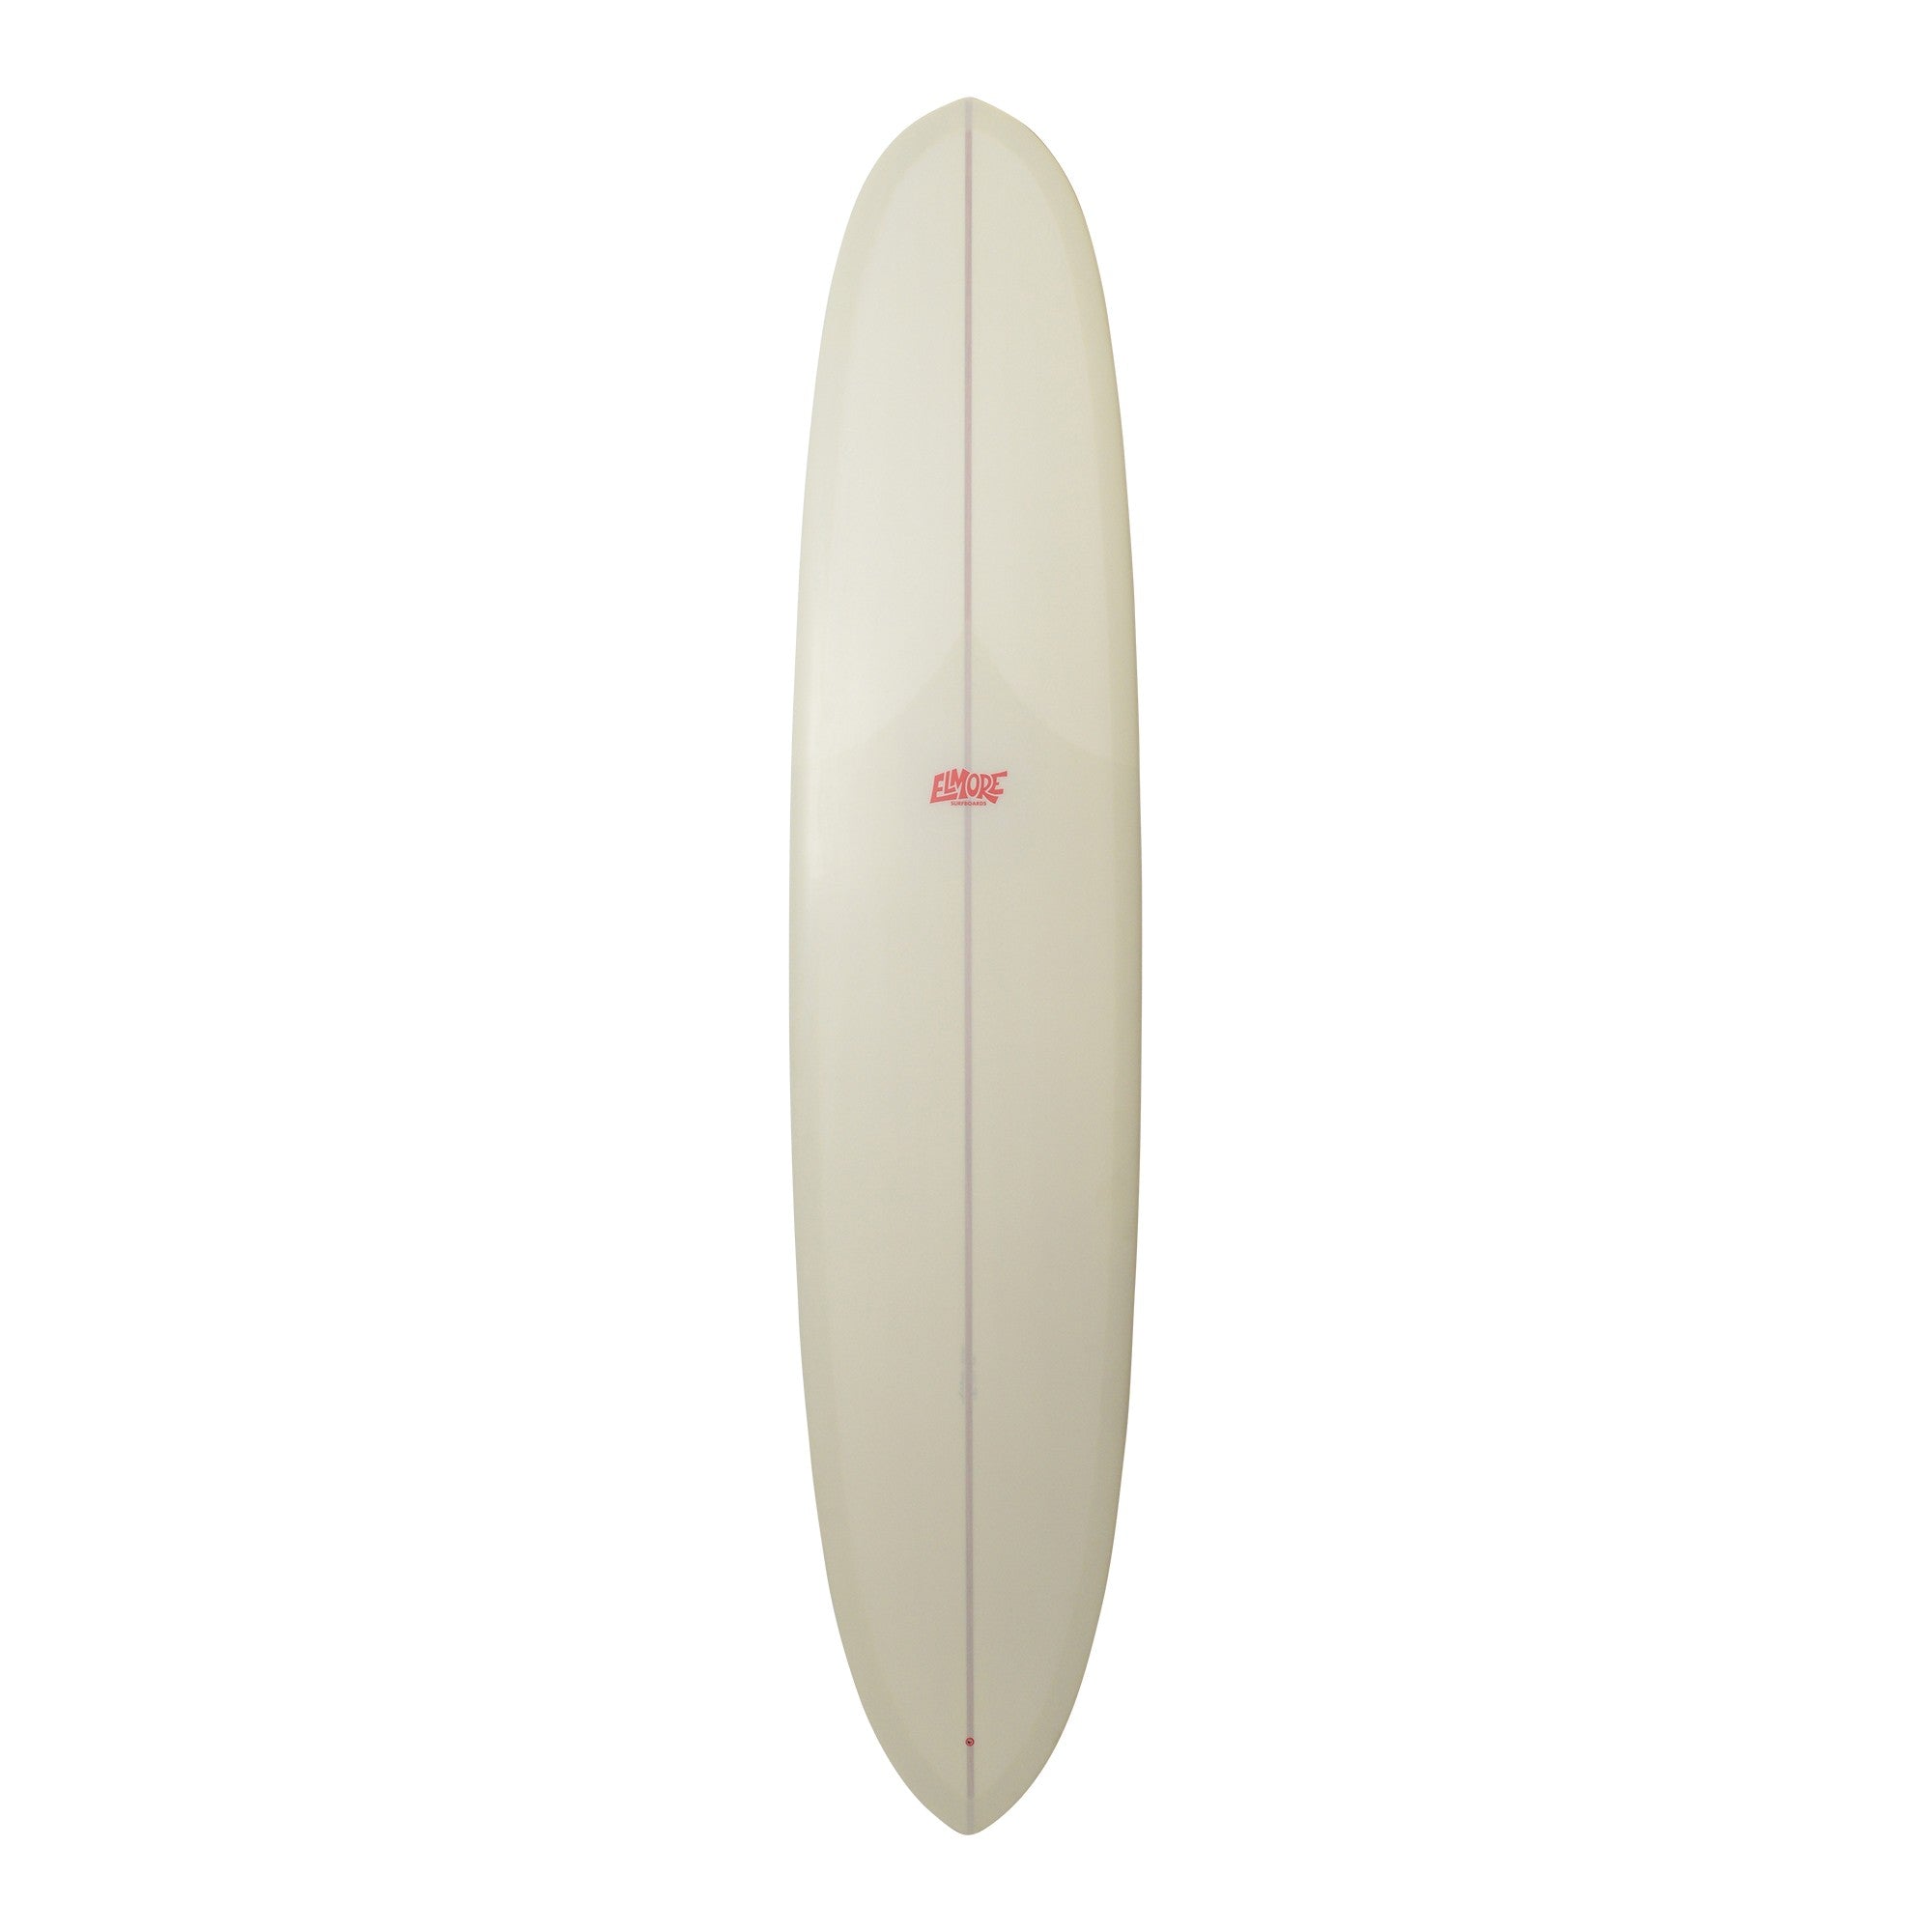 ELMORE SURFBOARDS - Longboard Easy Pin - 9'4 (PU) - Crema